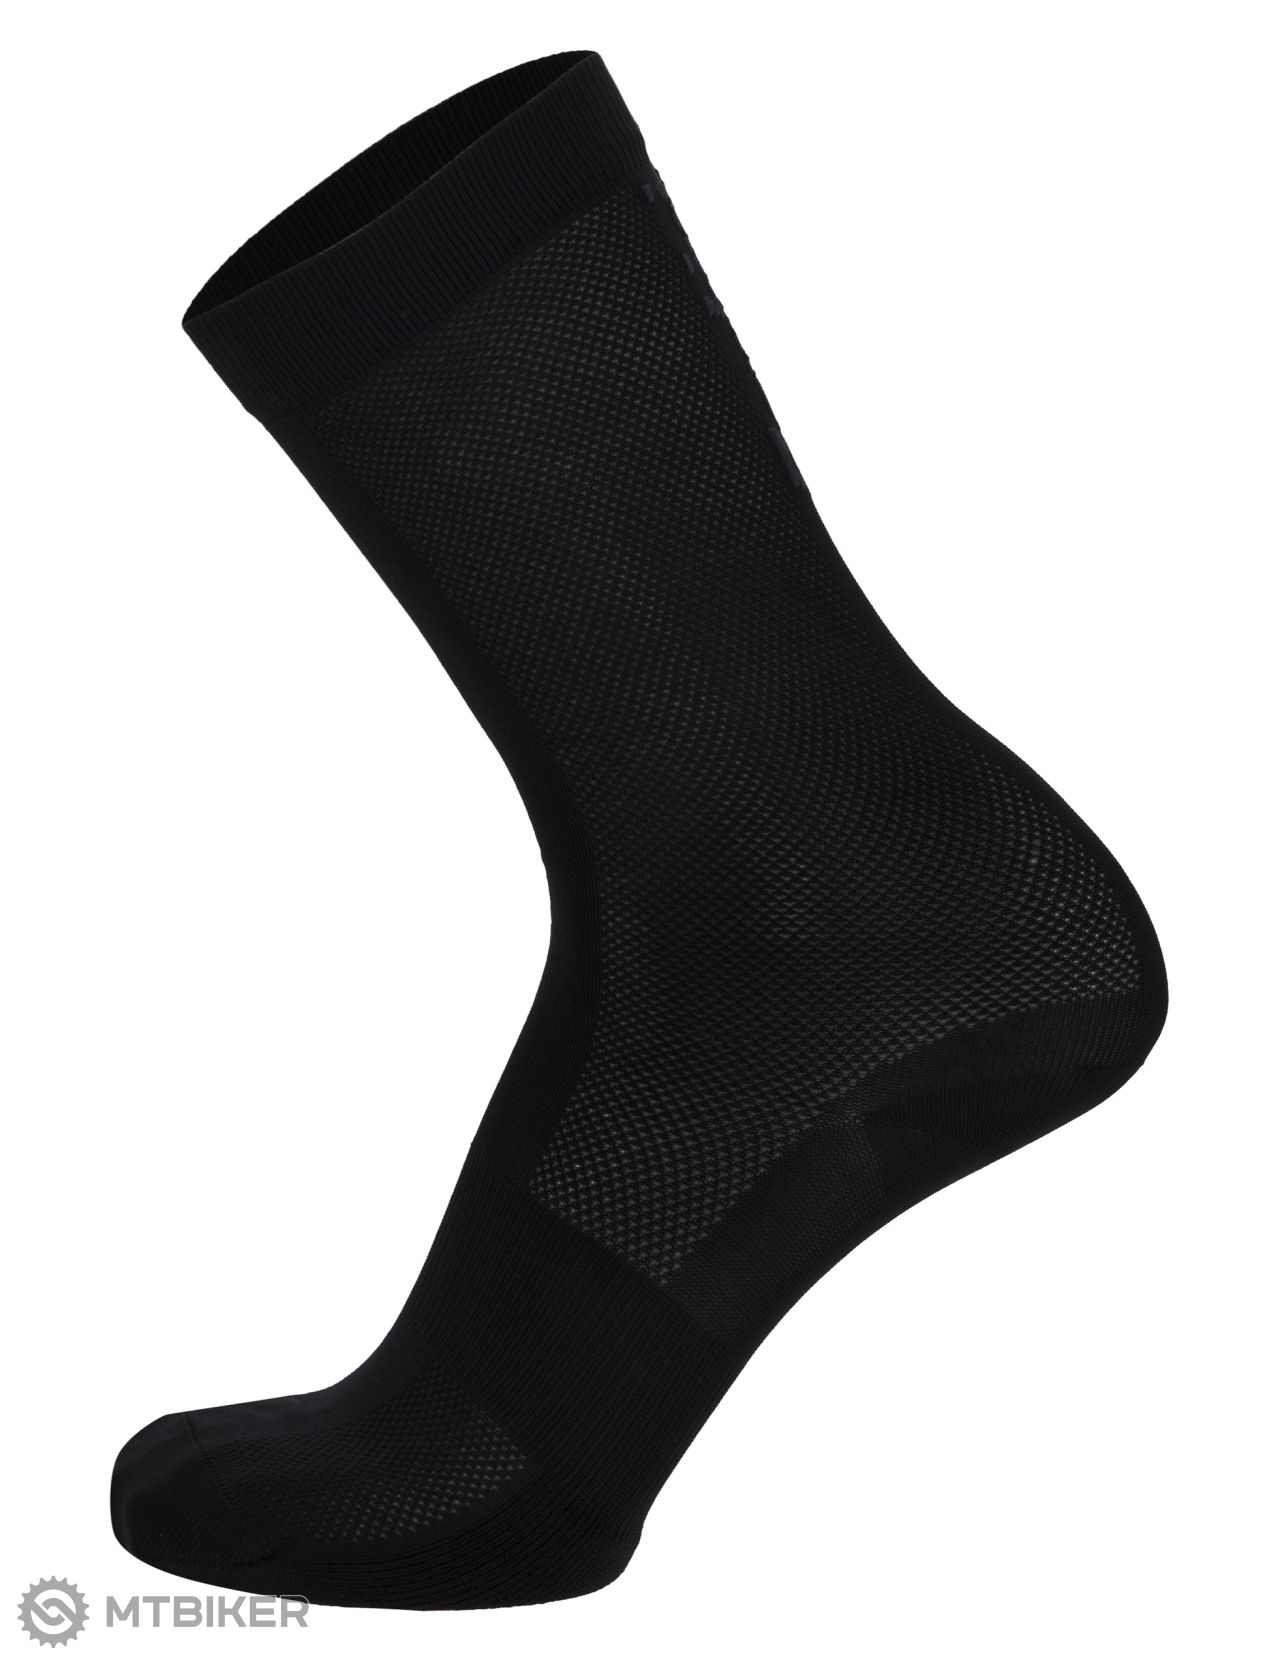 Santini Puro socks, black - MTBIKER.shop